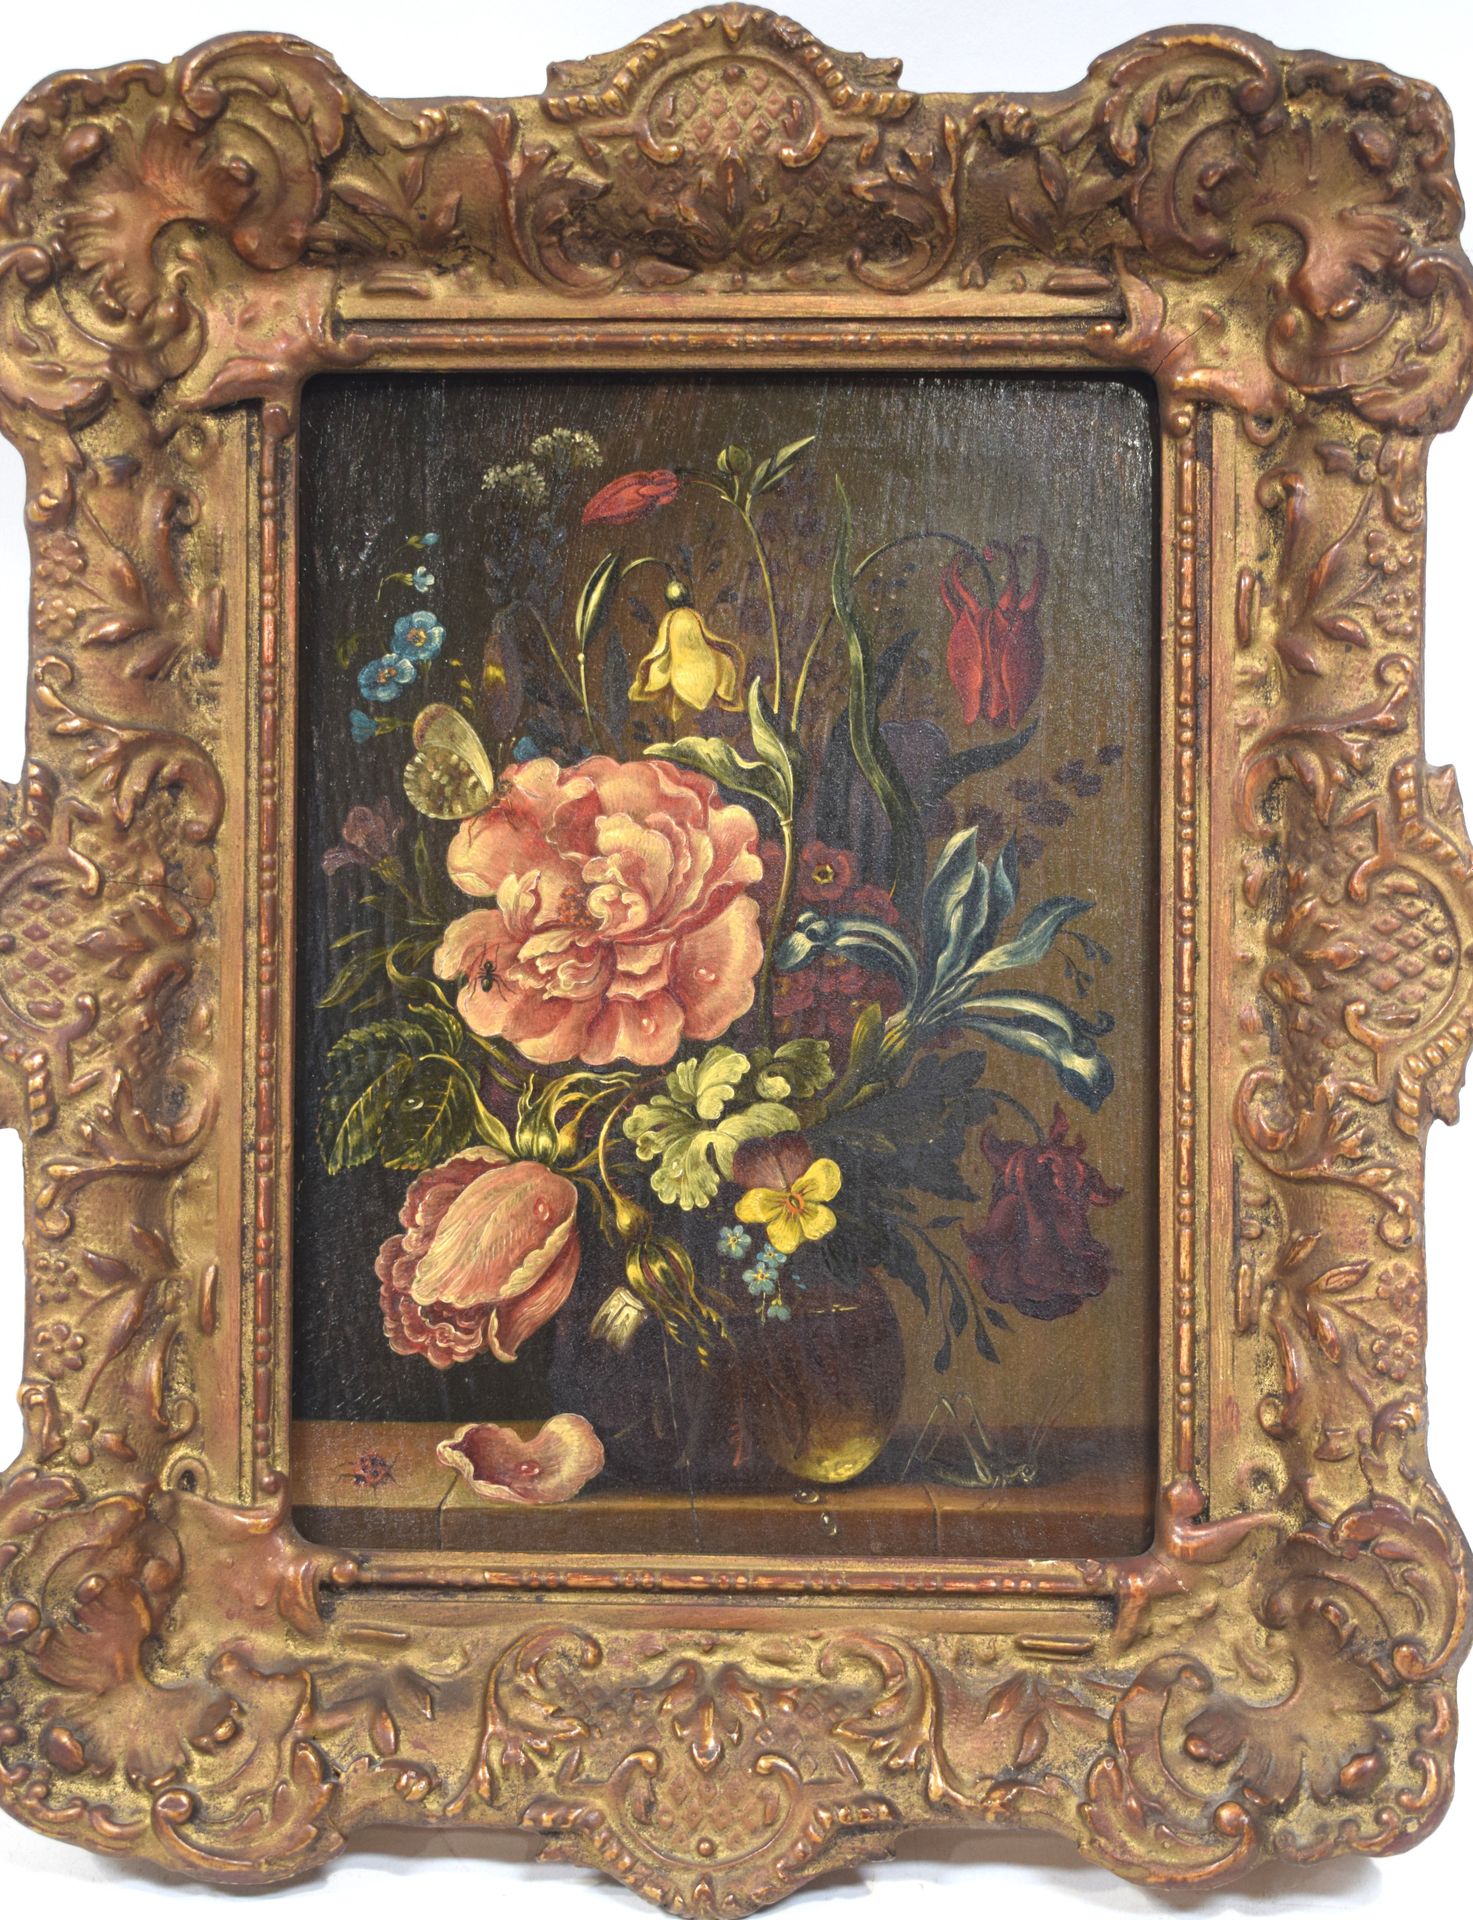 Null Bodegón con flores e insectos, óleo sobre tabla, sin firmar, 24 x 18 cm

|
&hellip;